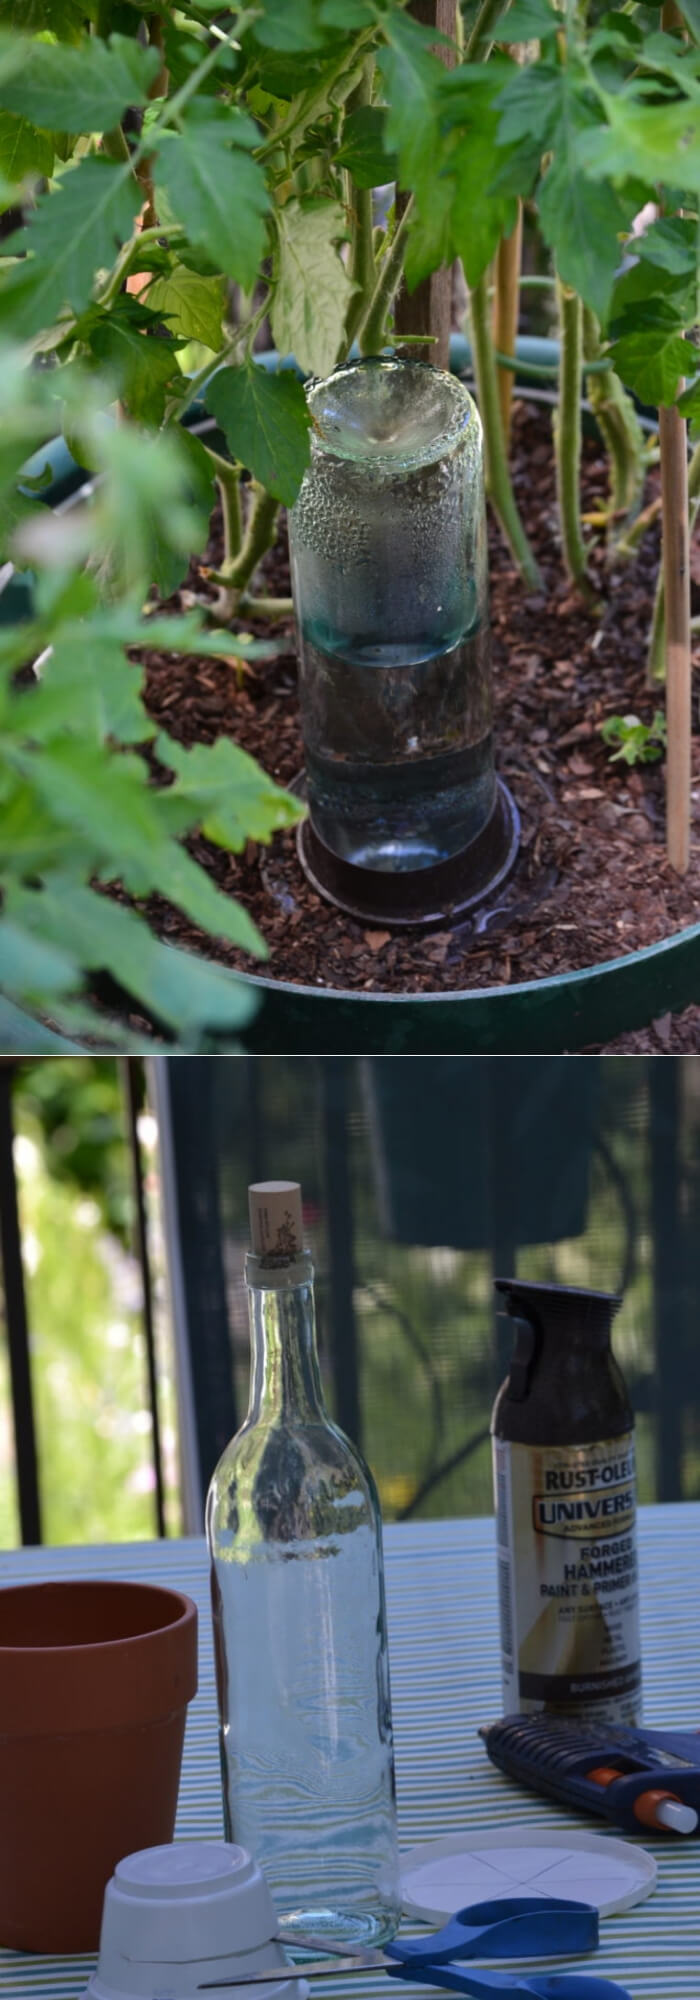 DIY Self-Watering Planters from Wine bottle | Best DIY Self-Watering System Ideas